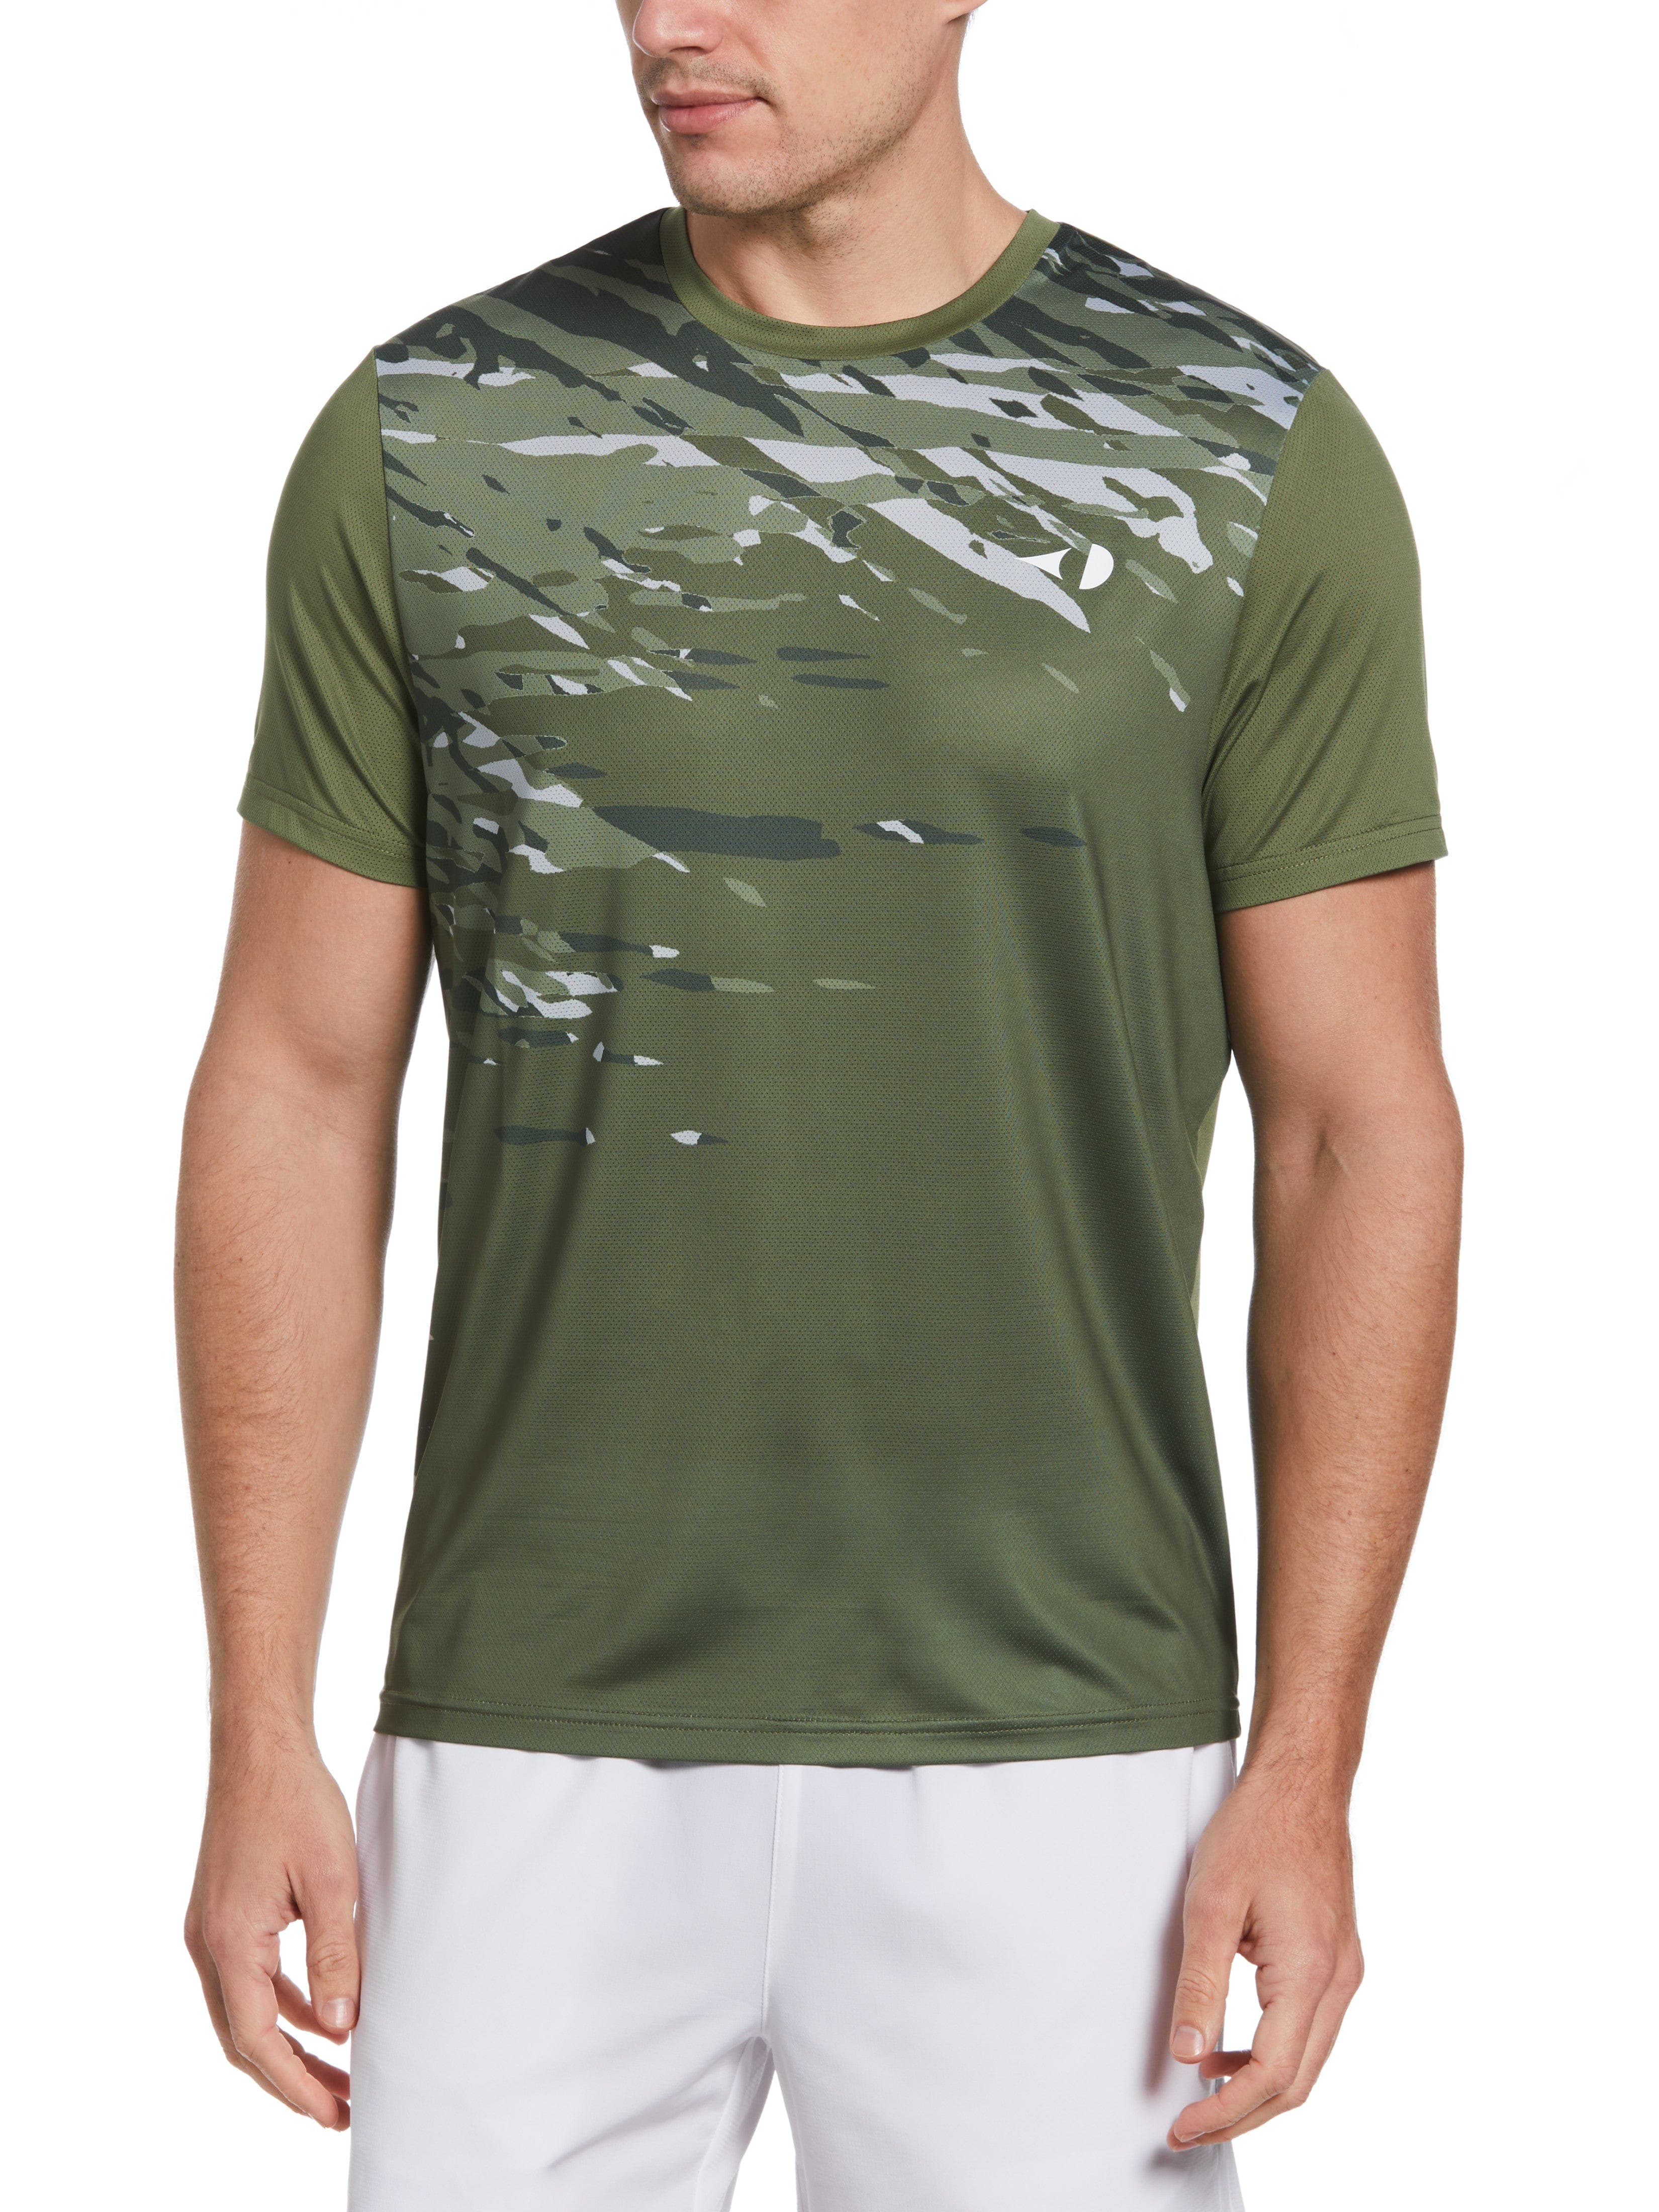 Grand Slam Mens Asymmetric Camo Print Tennis T-Shirt, Size Small, Olivine Green, Polyester/Spandex | Golf Apparel Shop